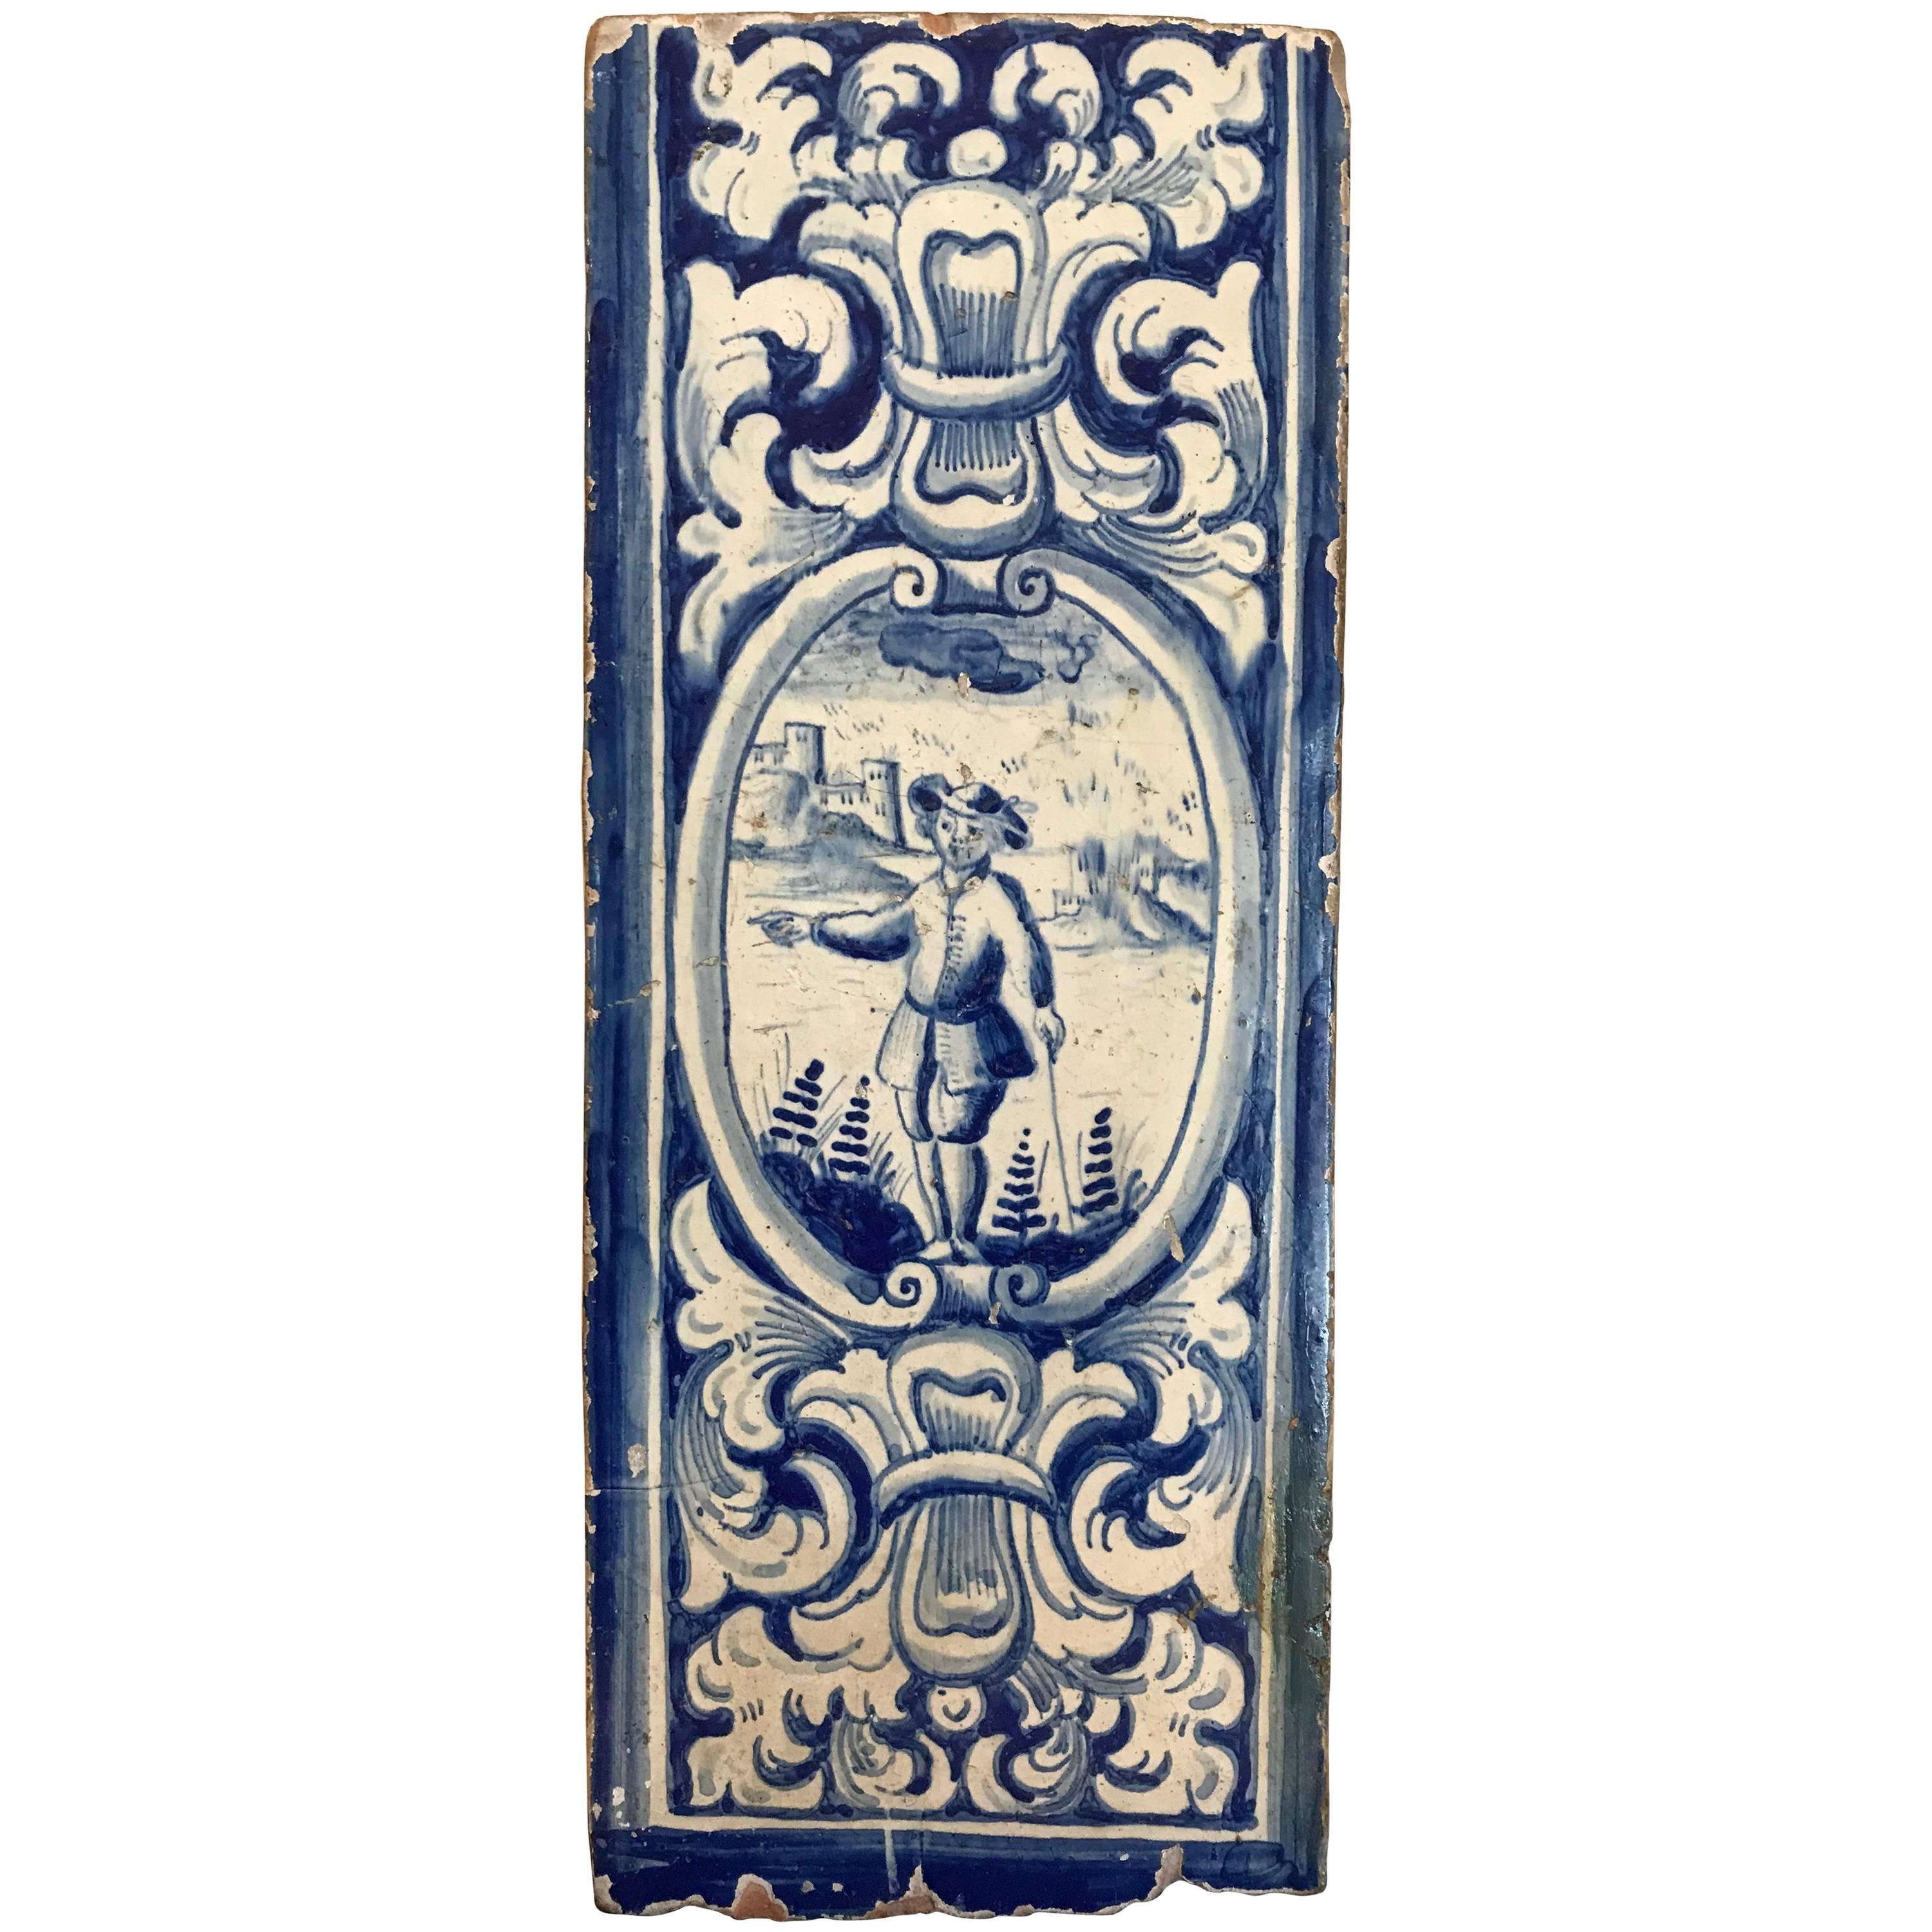 18th Century Dutch Delft Blue and White Glazed Ceramic Stove Tile